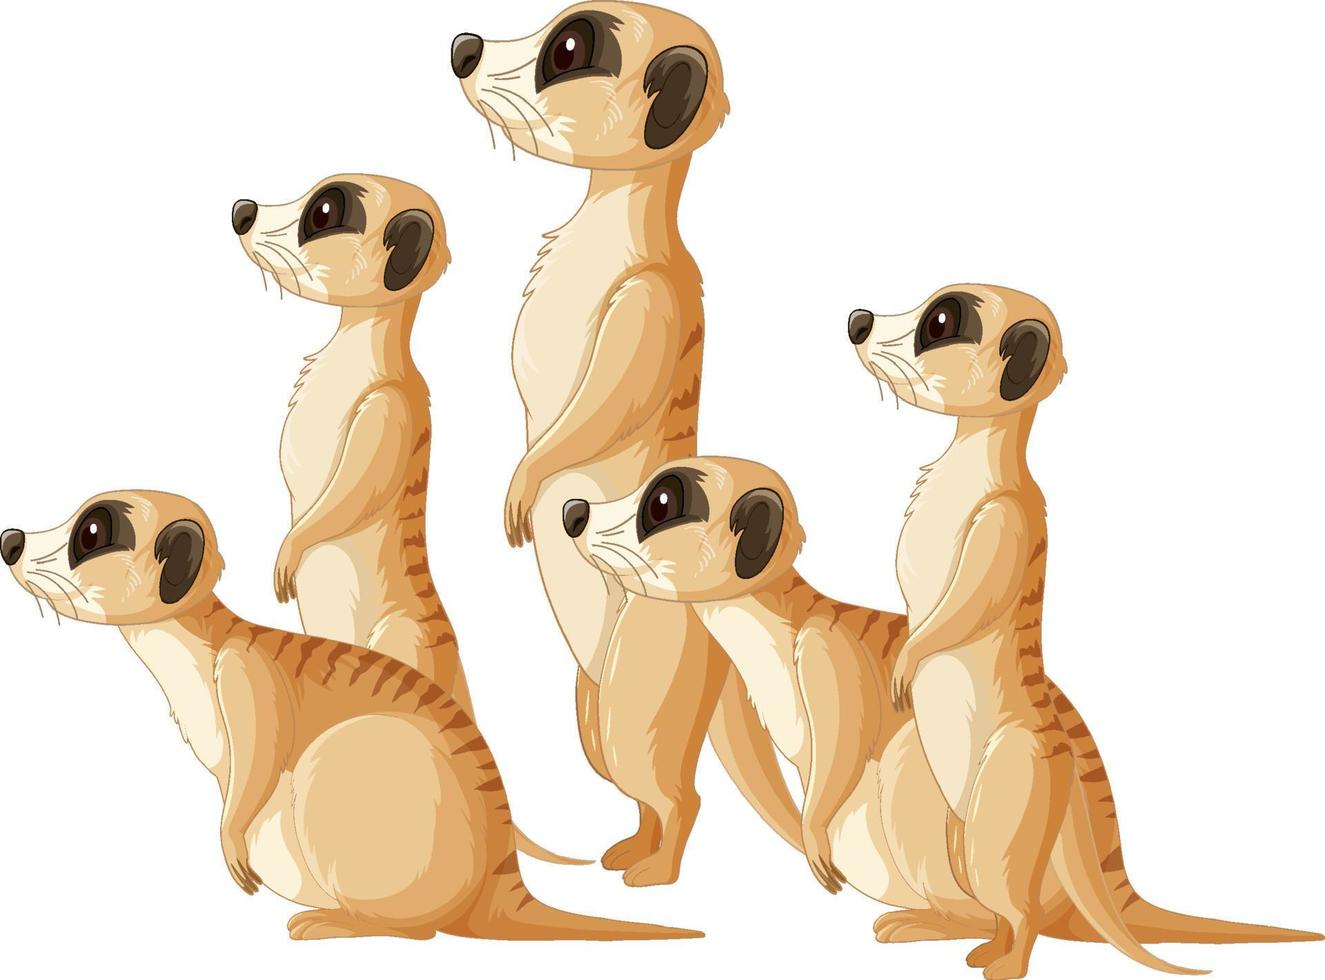 Side view of meerkats group in cartoon style vector